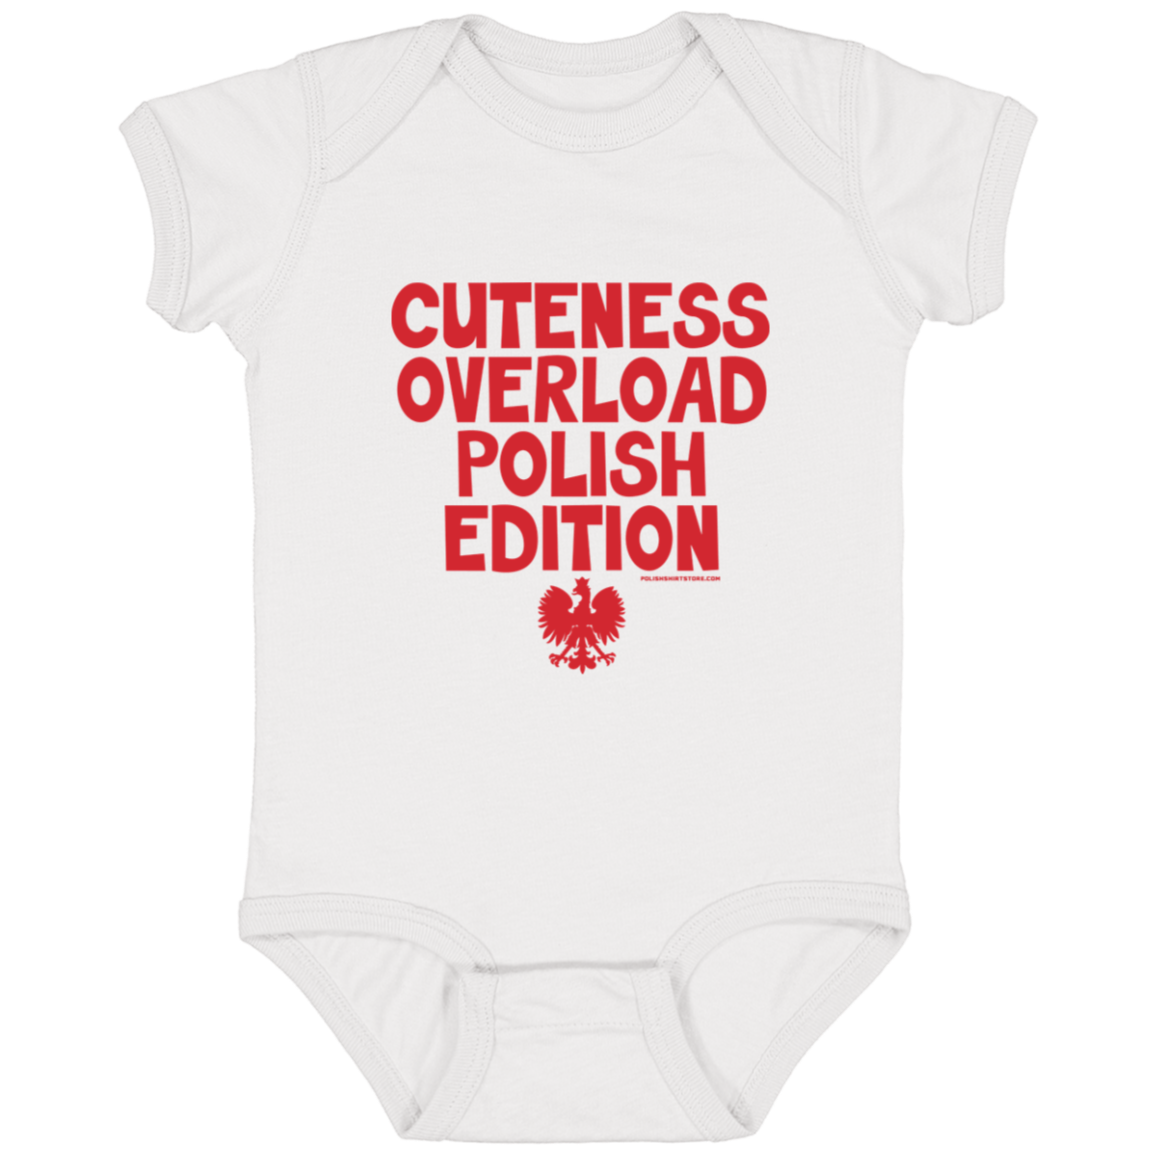 Cuteness Overlaod Polish Edition Infant Bodysuit - Polish Shirt Store